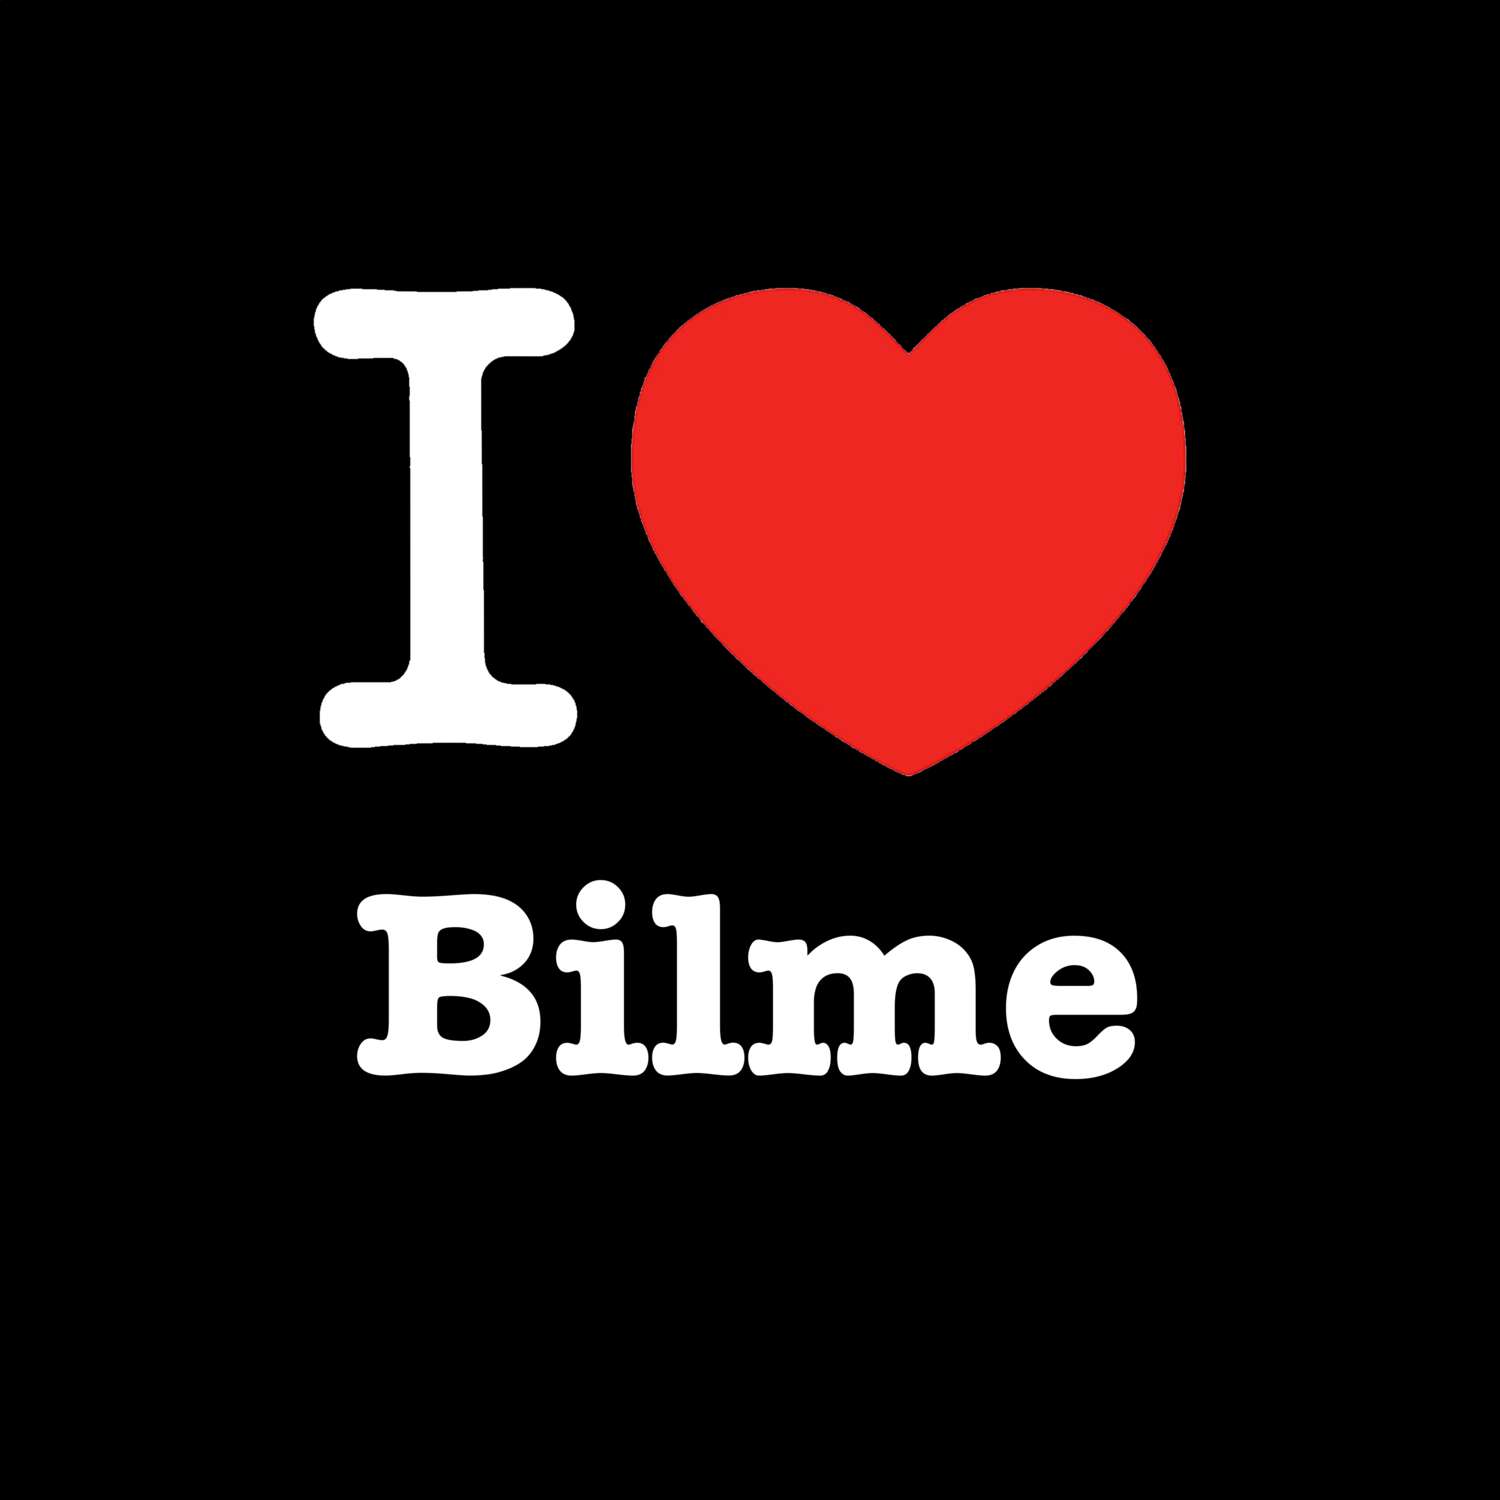 Bilme T-Shirt »I love«